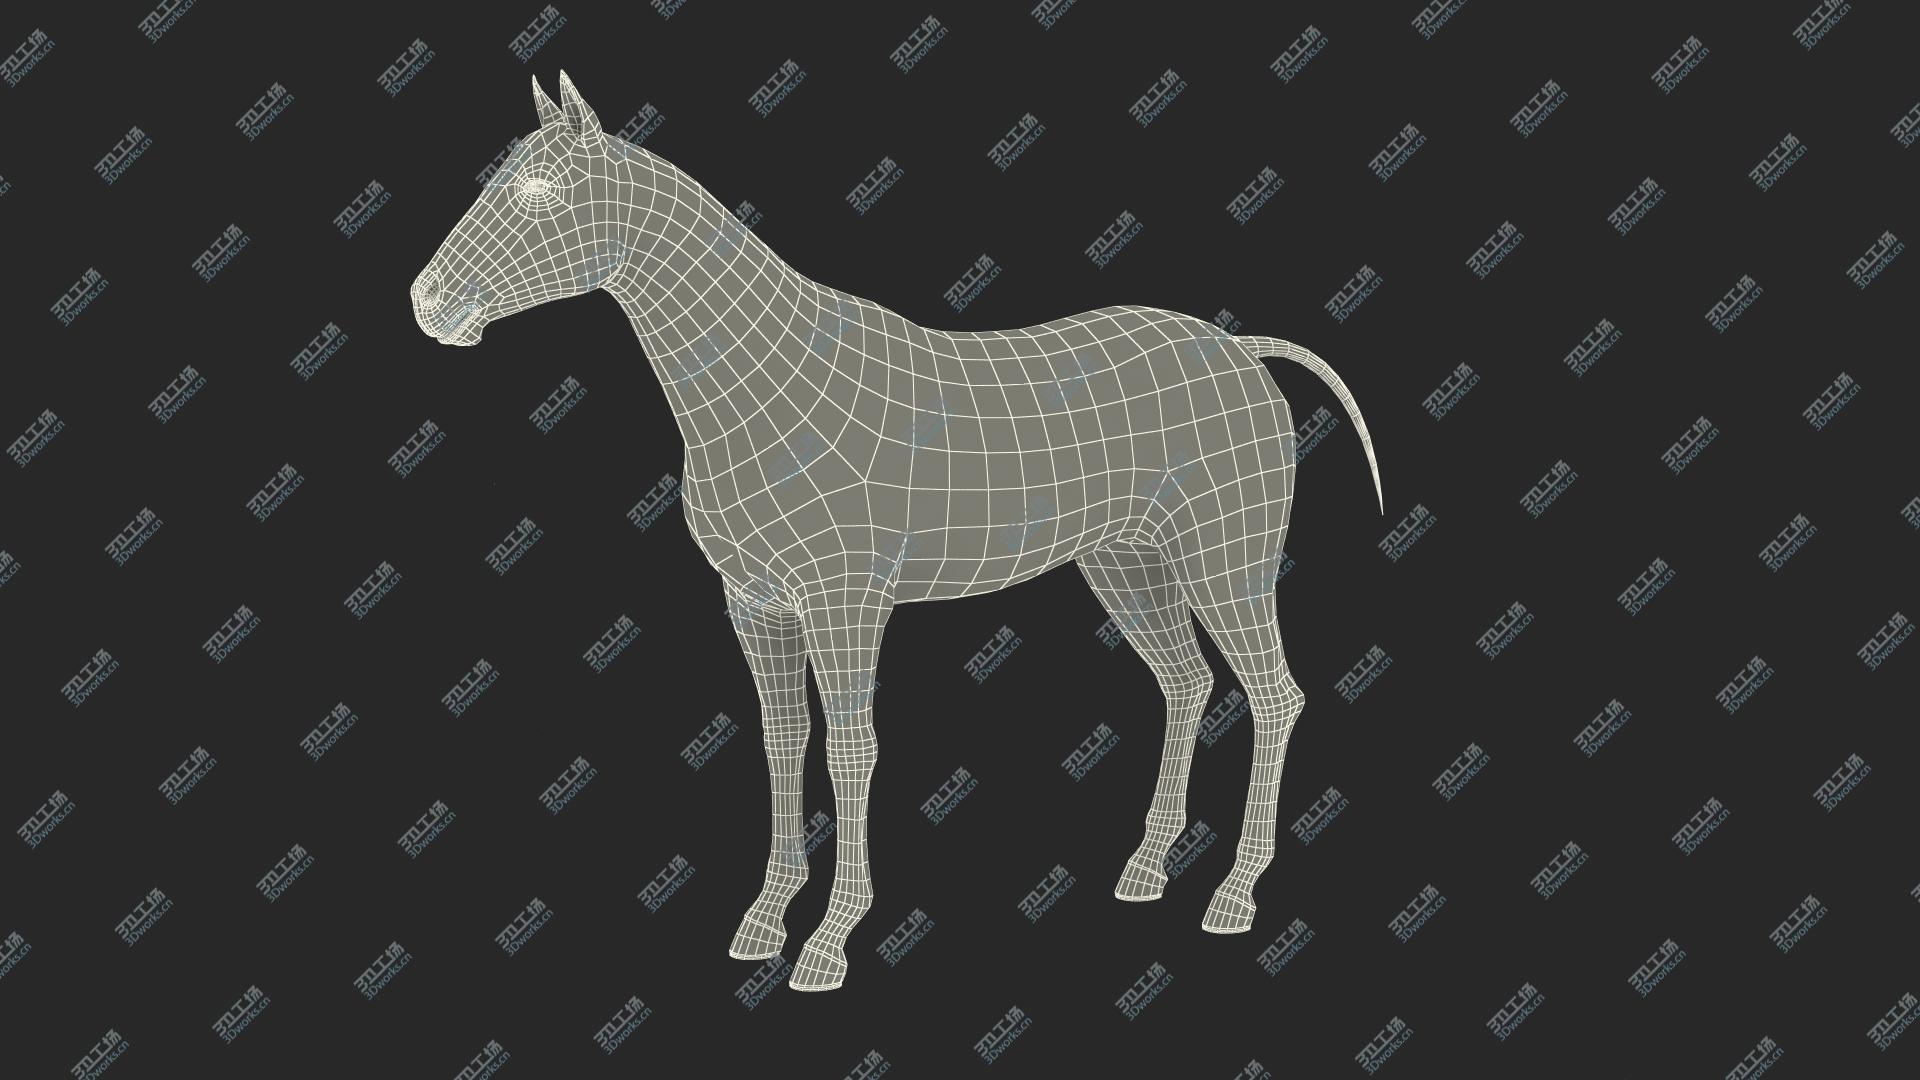 images/goods_img/20210319/3D White Horse Fur Rigged/5.jpg